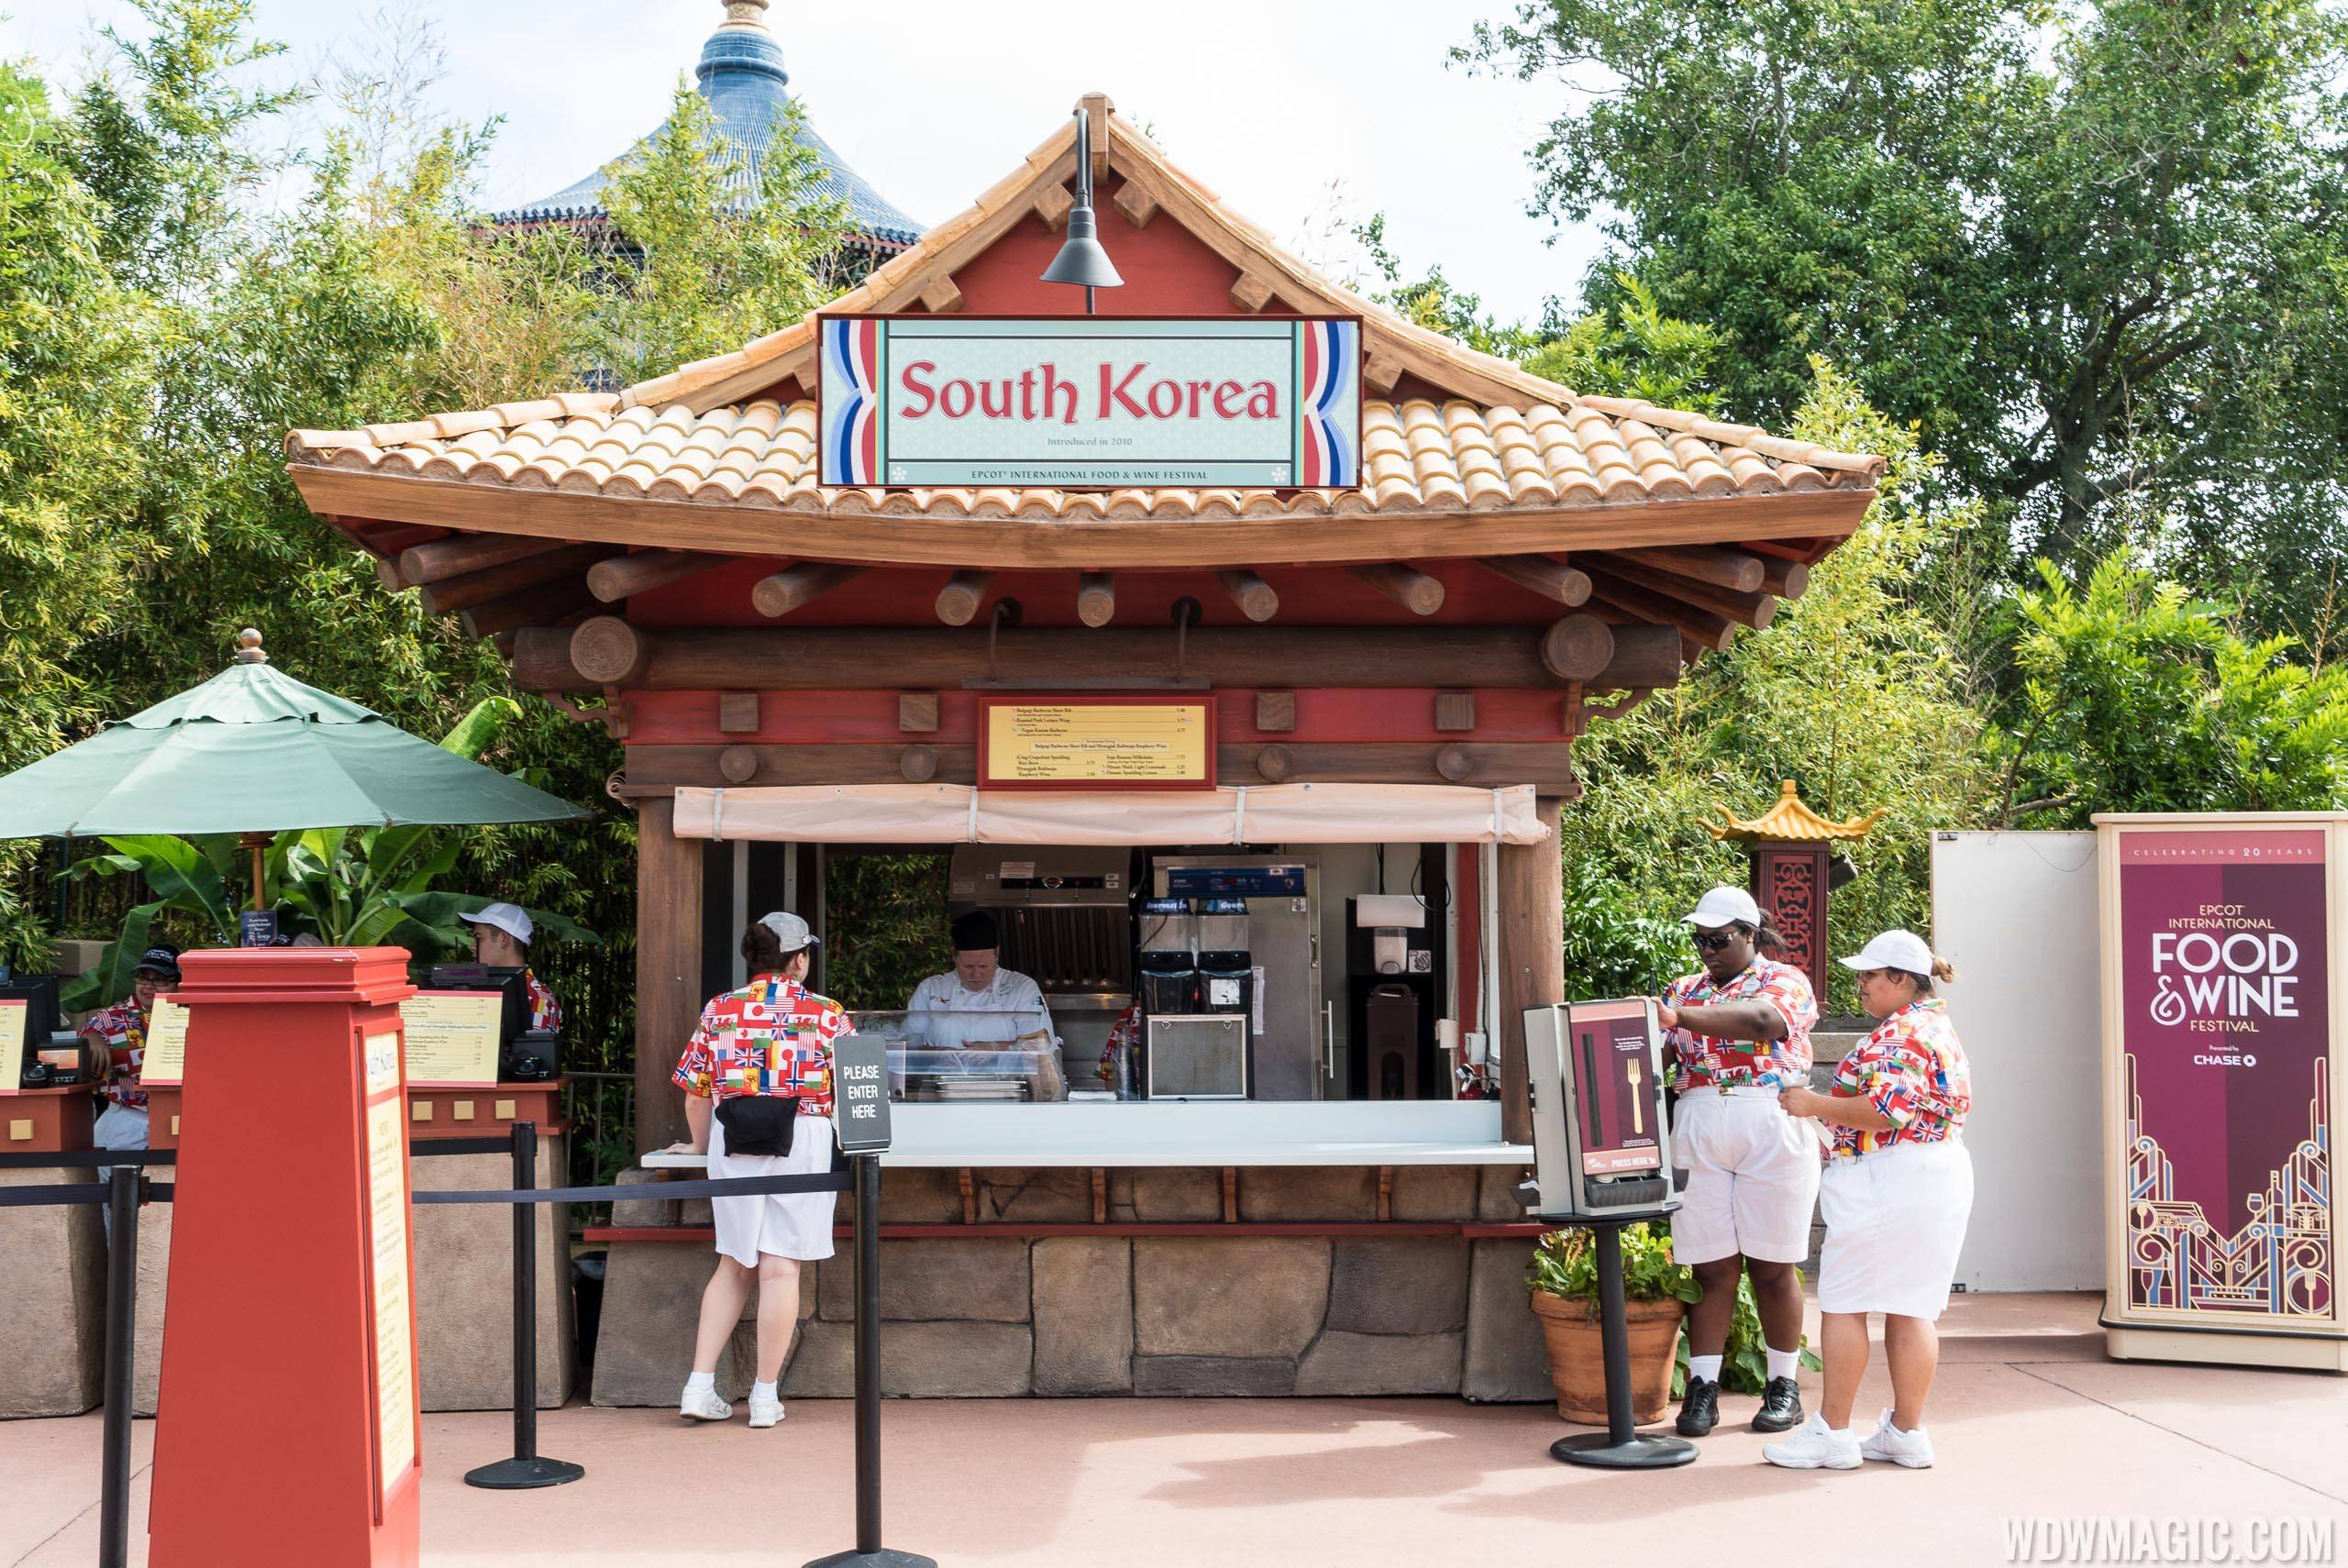 2015 Epcot Food and Wine Festival Marketplace kiosk - South Korea